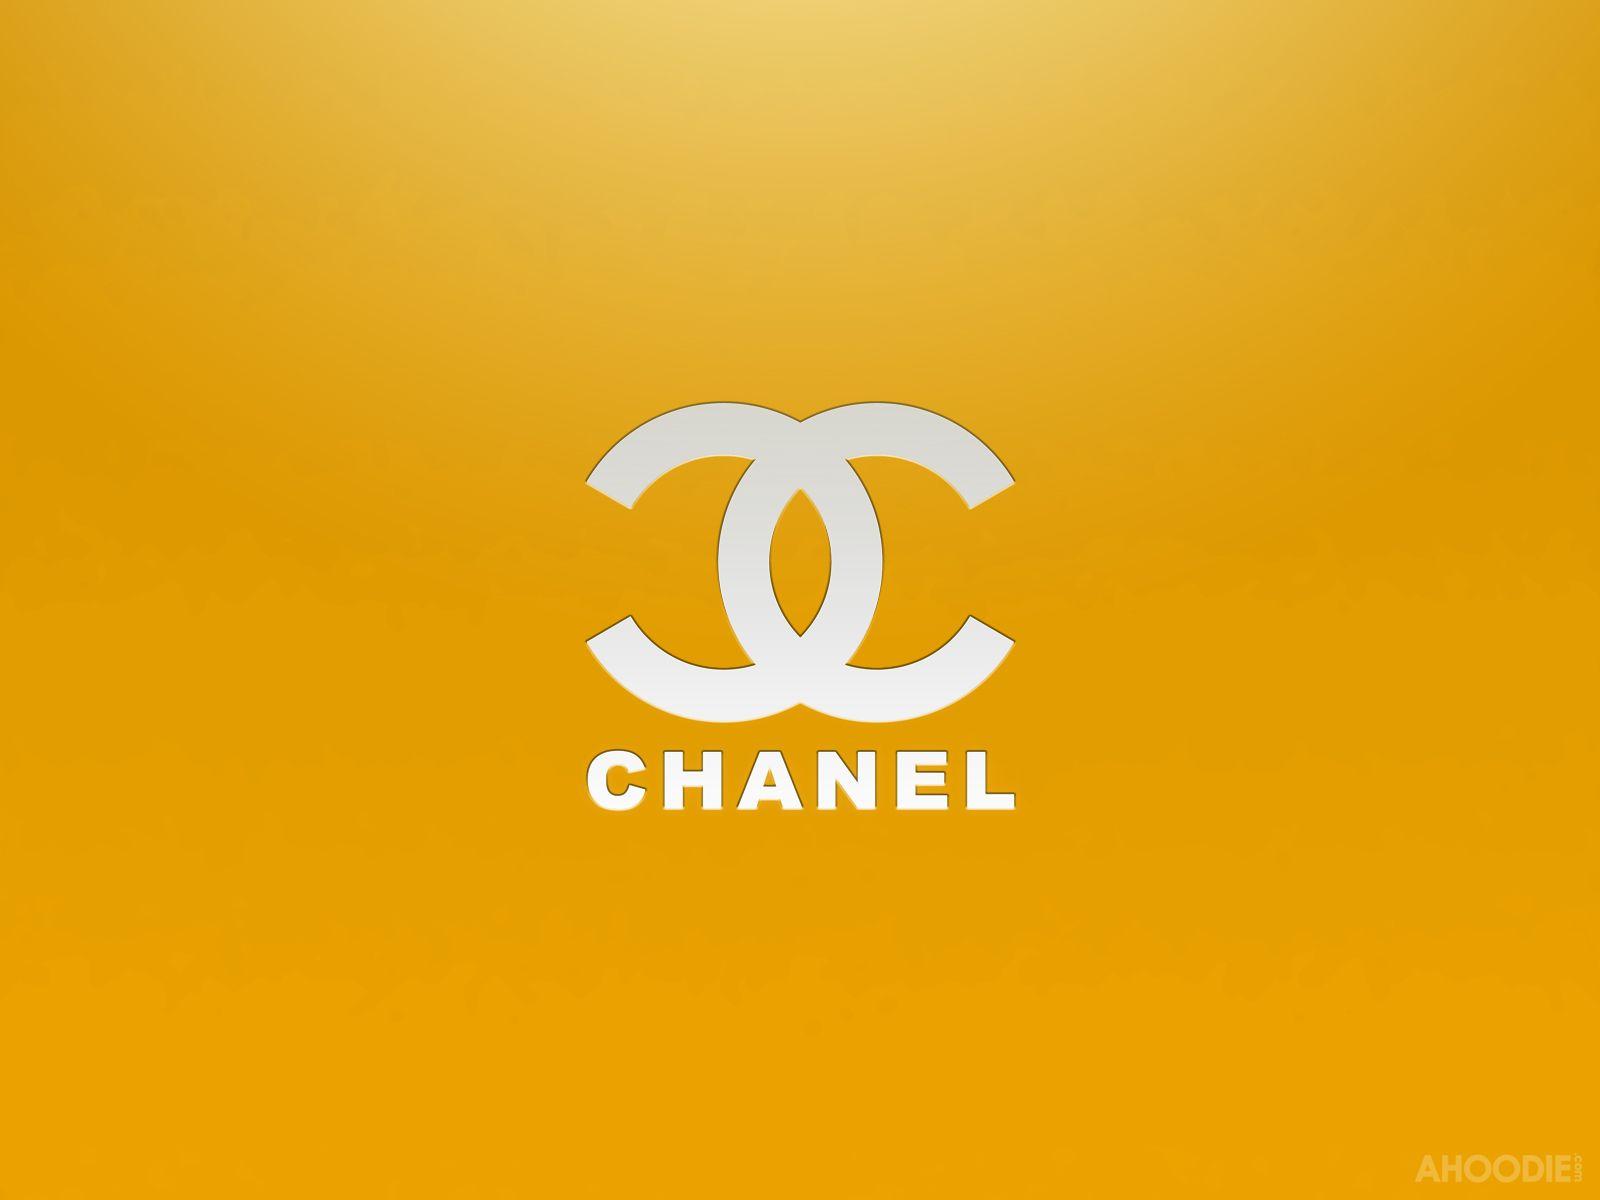 Hd Wallpaper Chanel Logo 2880 X 1800 105 Kb Jpeg. HD Wallpaper